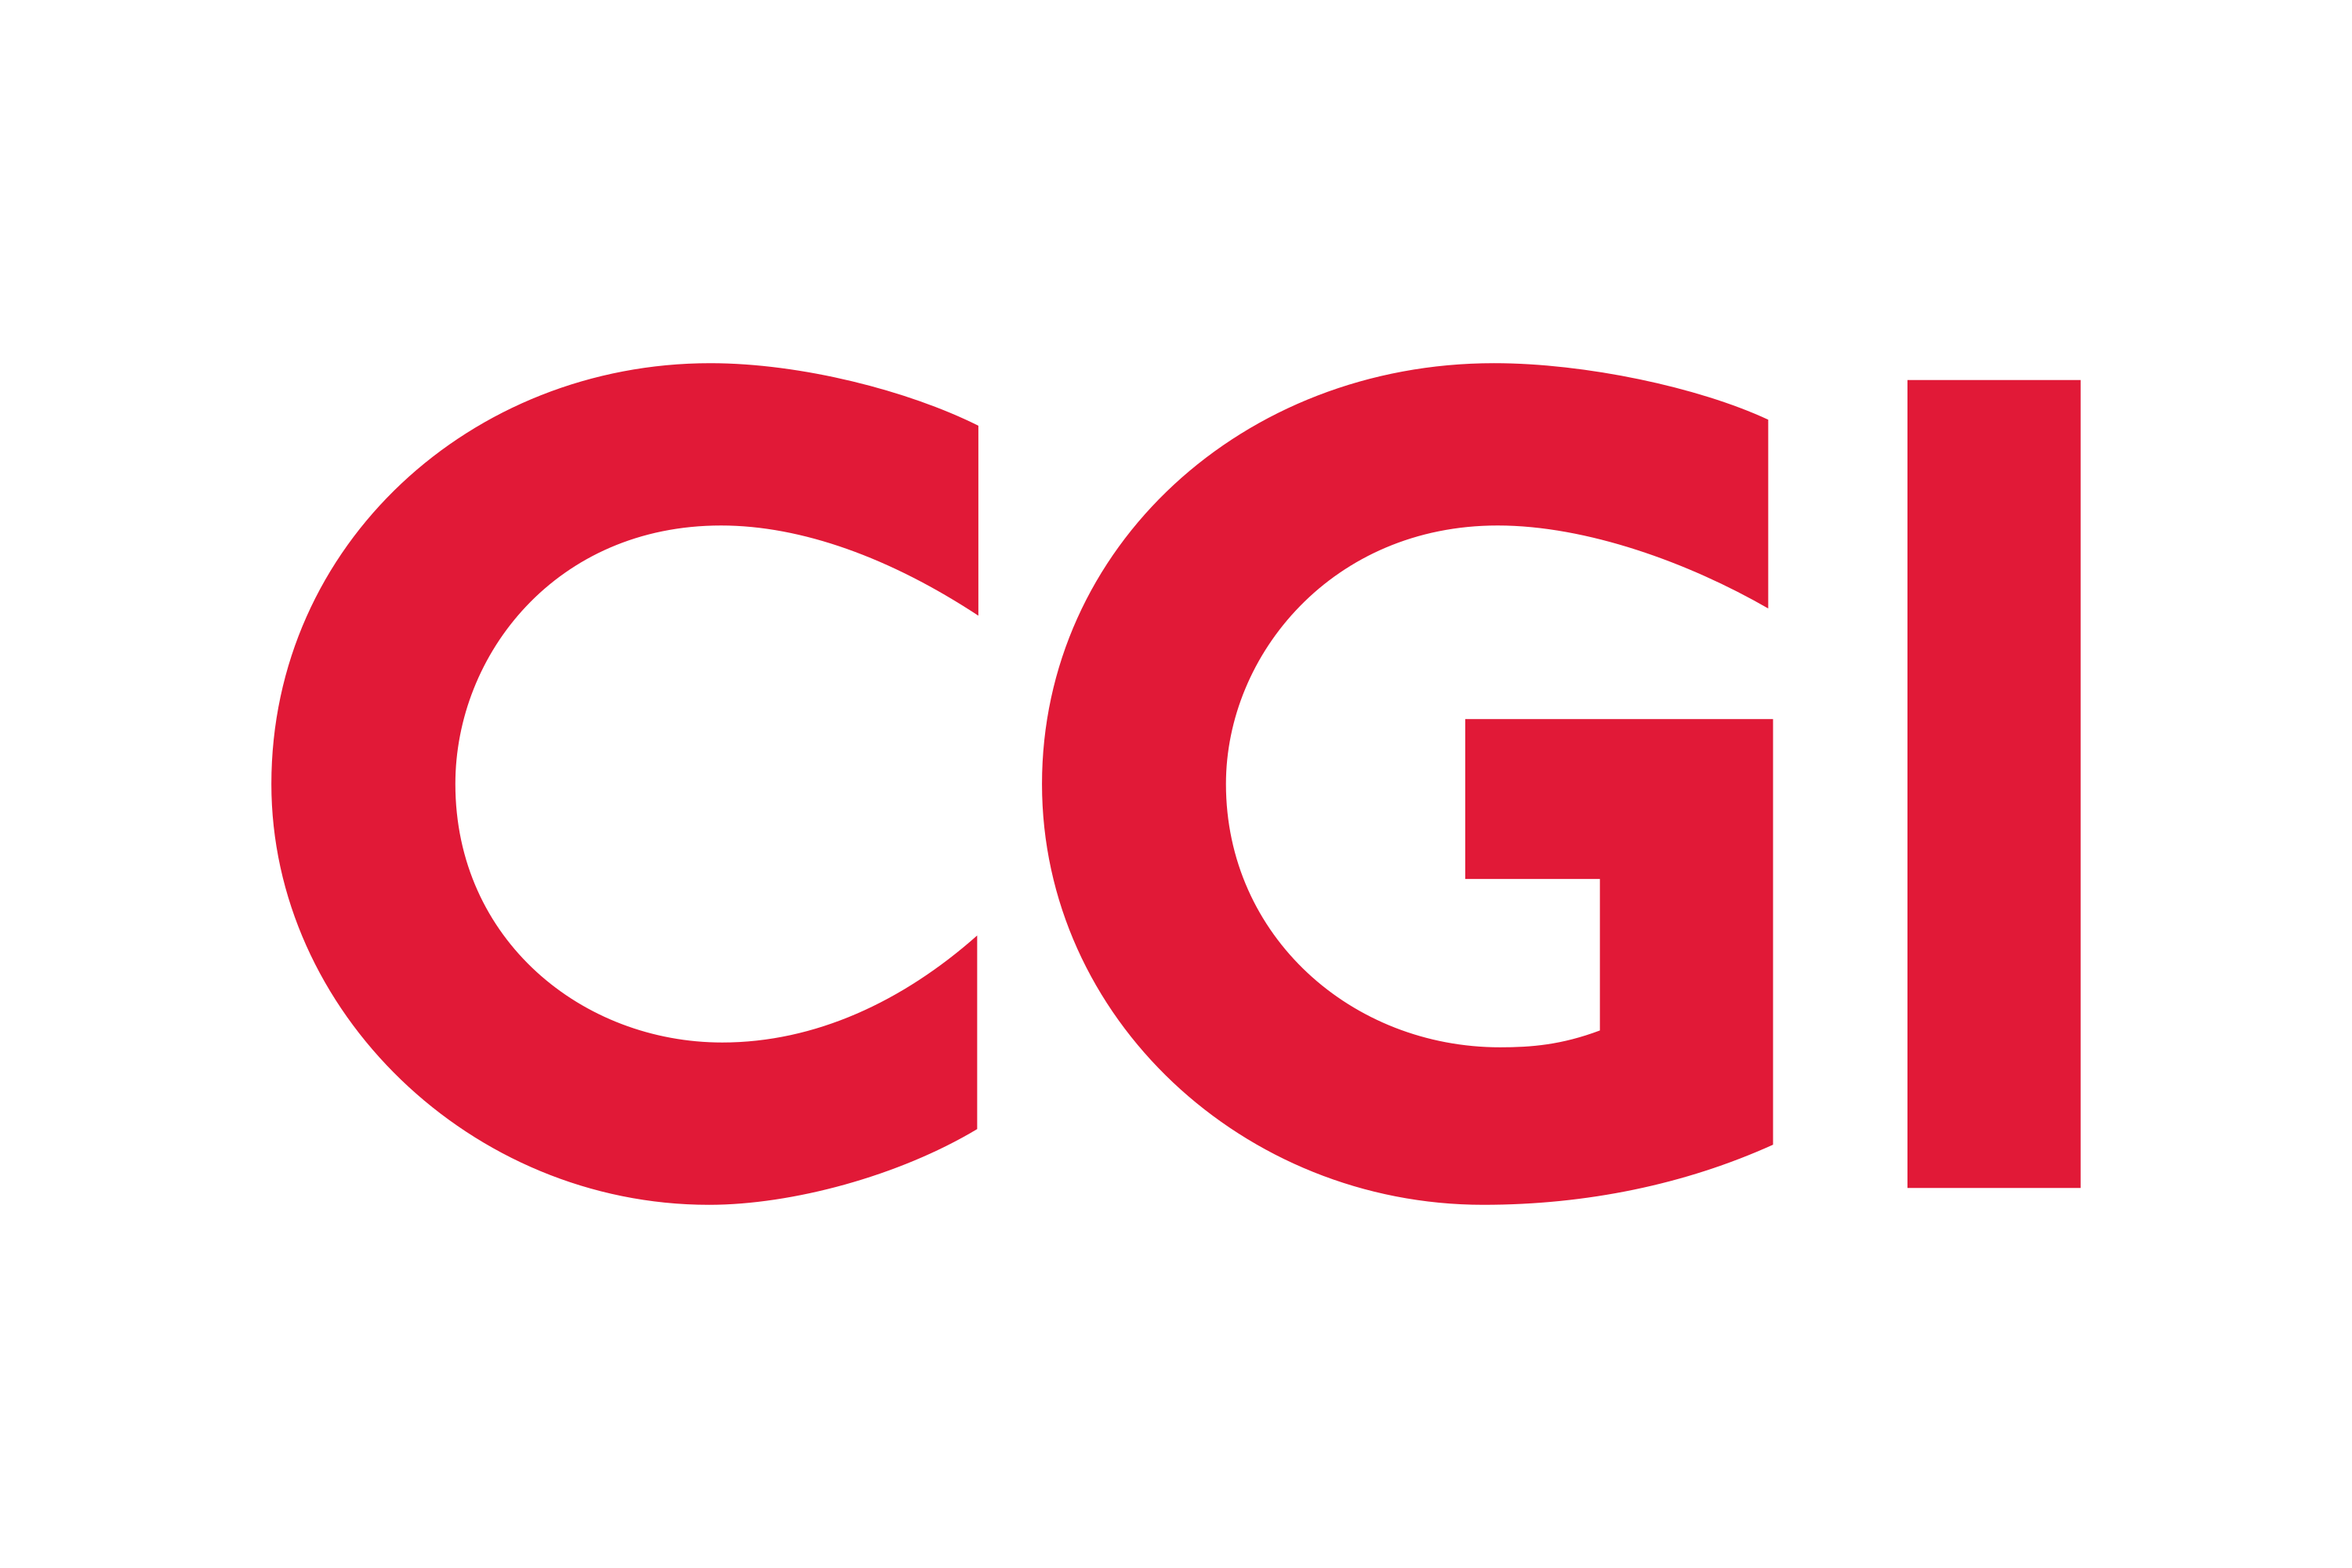 Download CGI Group Logo in SVG Vector or PNG File Format - Logo.wine